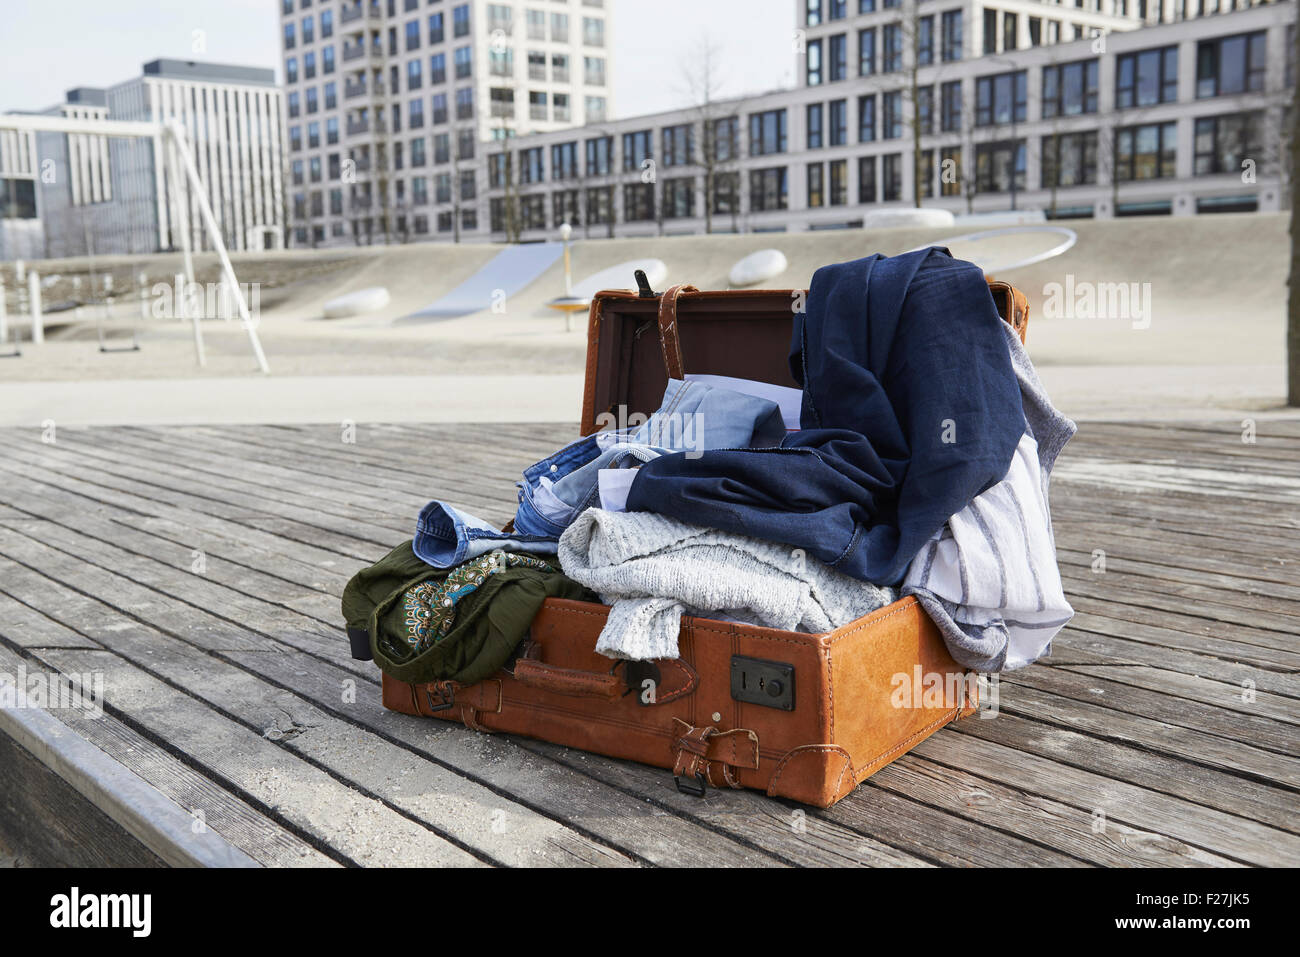 https://c8.alamy.com/comp/F27JK5/open-suitcase-full-of-clothing-on-floorboard-in-playground-munich-F27JK5.jpg